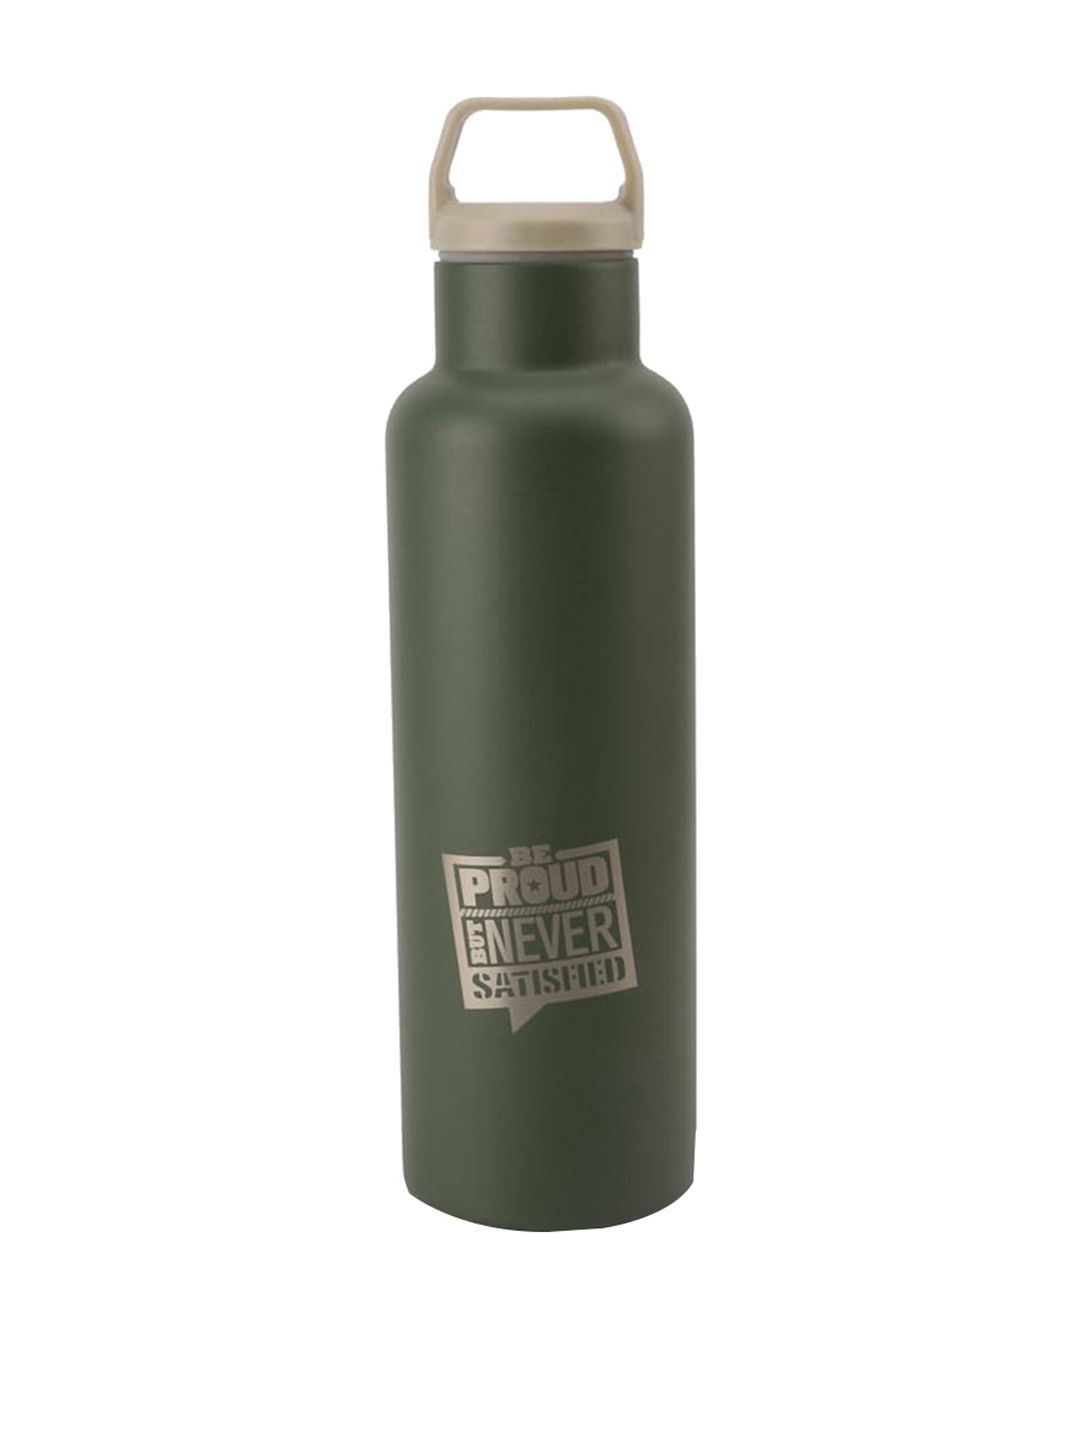 HOOM Green & Grey Printed Stainless Steel Water Bottle Price in India